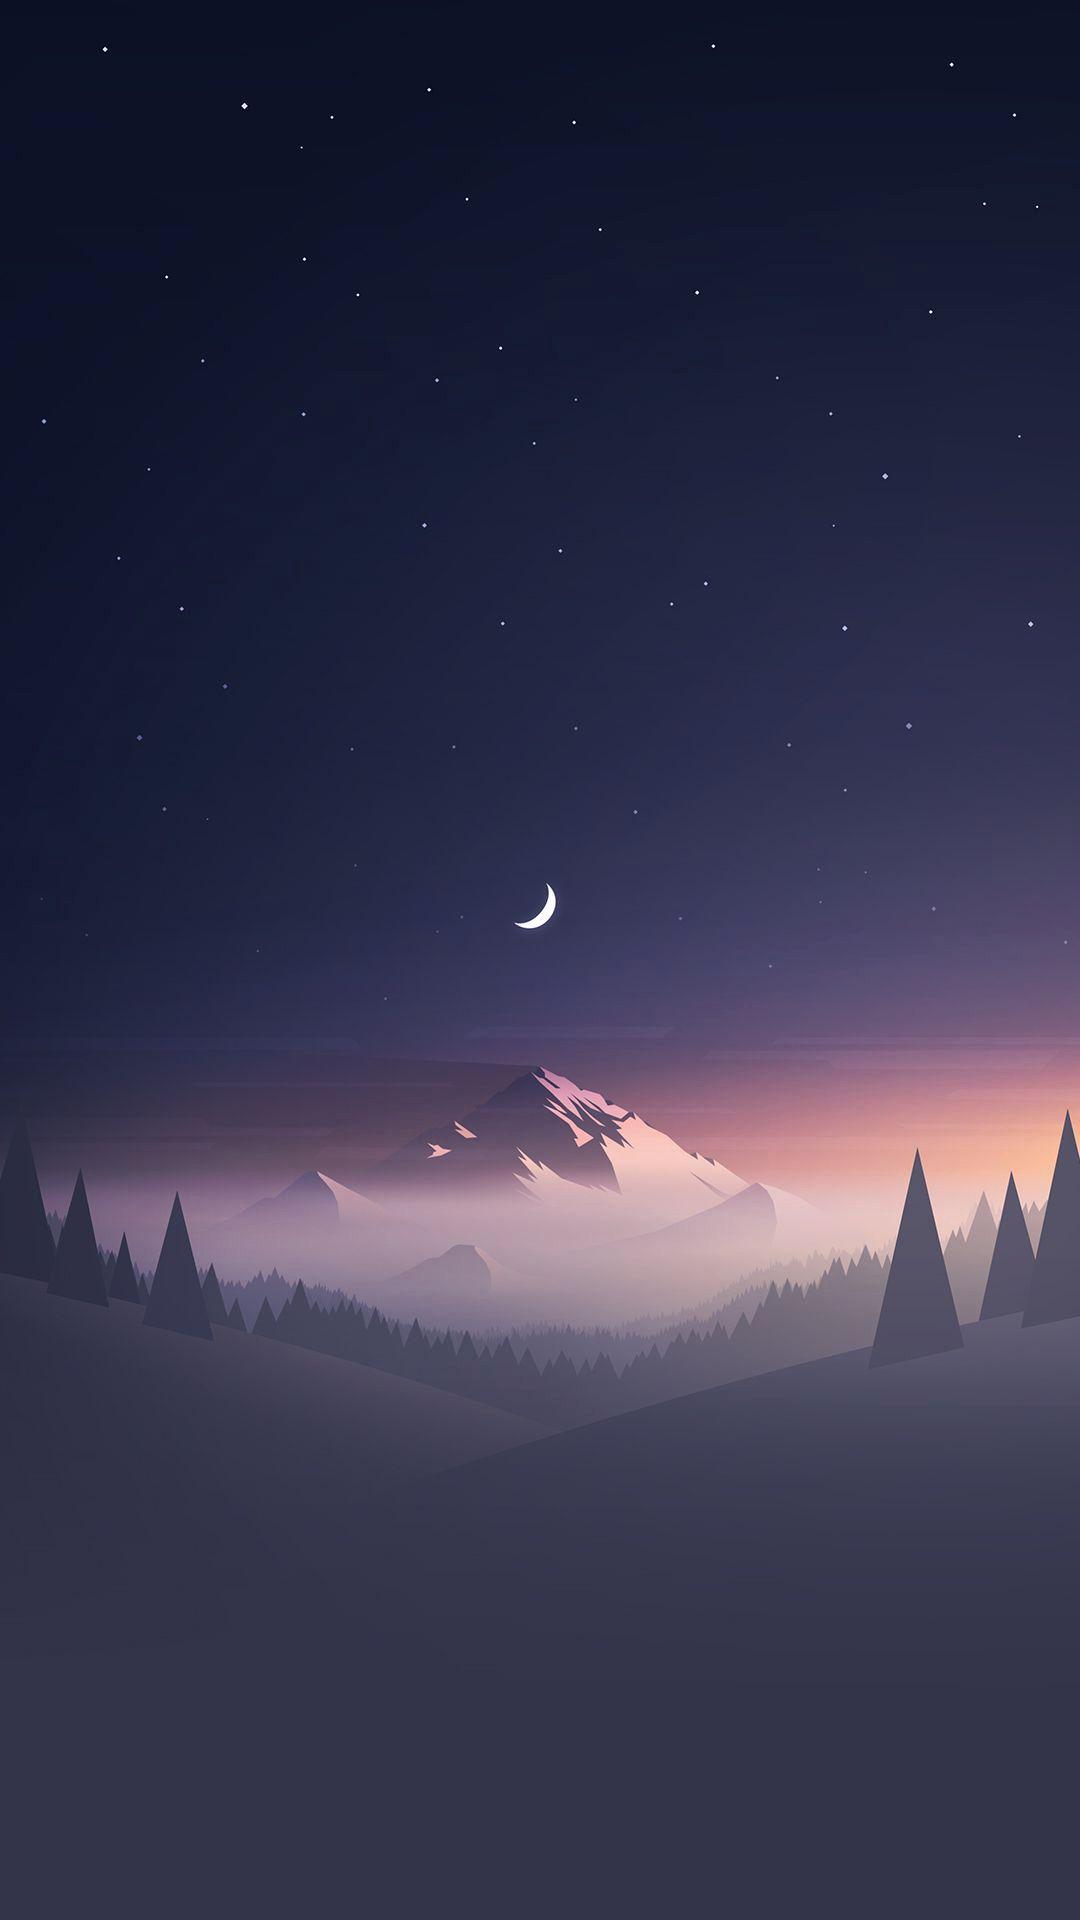 iPhone 8 Plus Wallpaper Zip Best Of Stars And Moon Winter Mountain